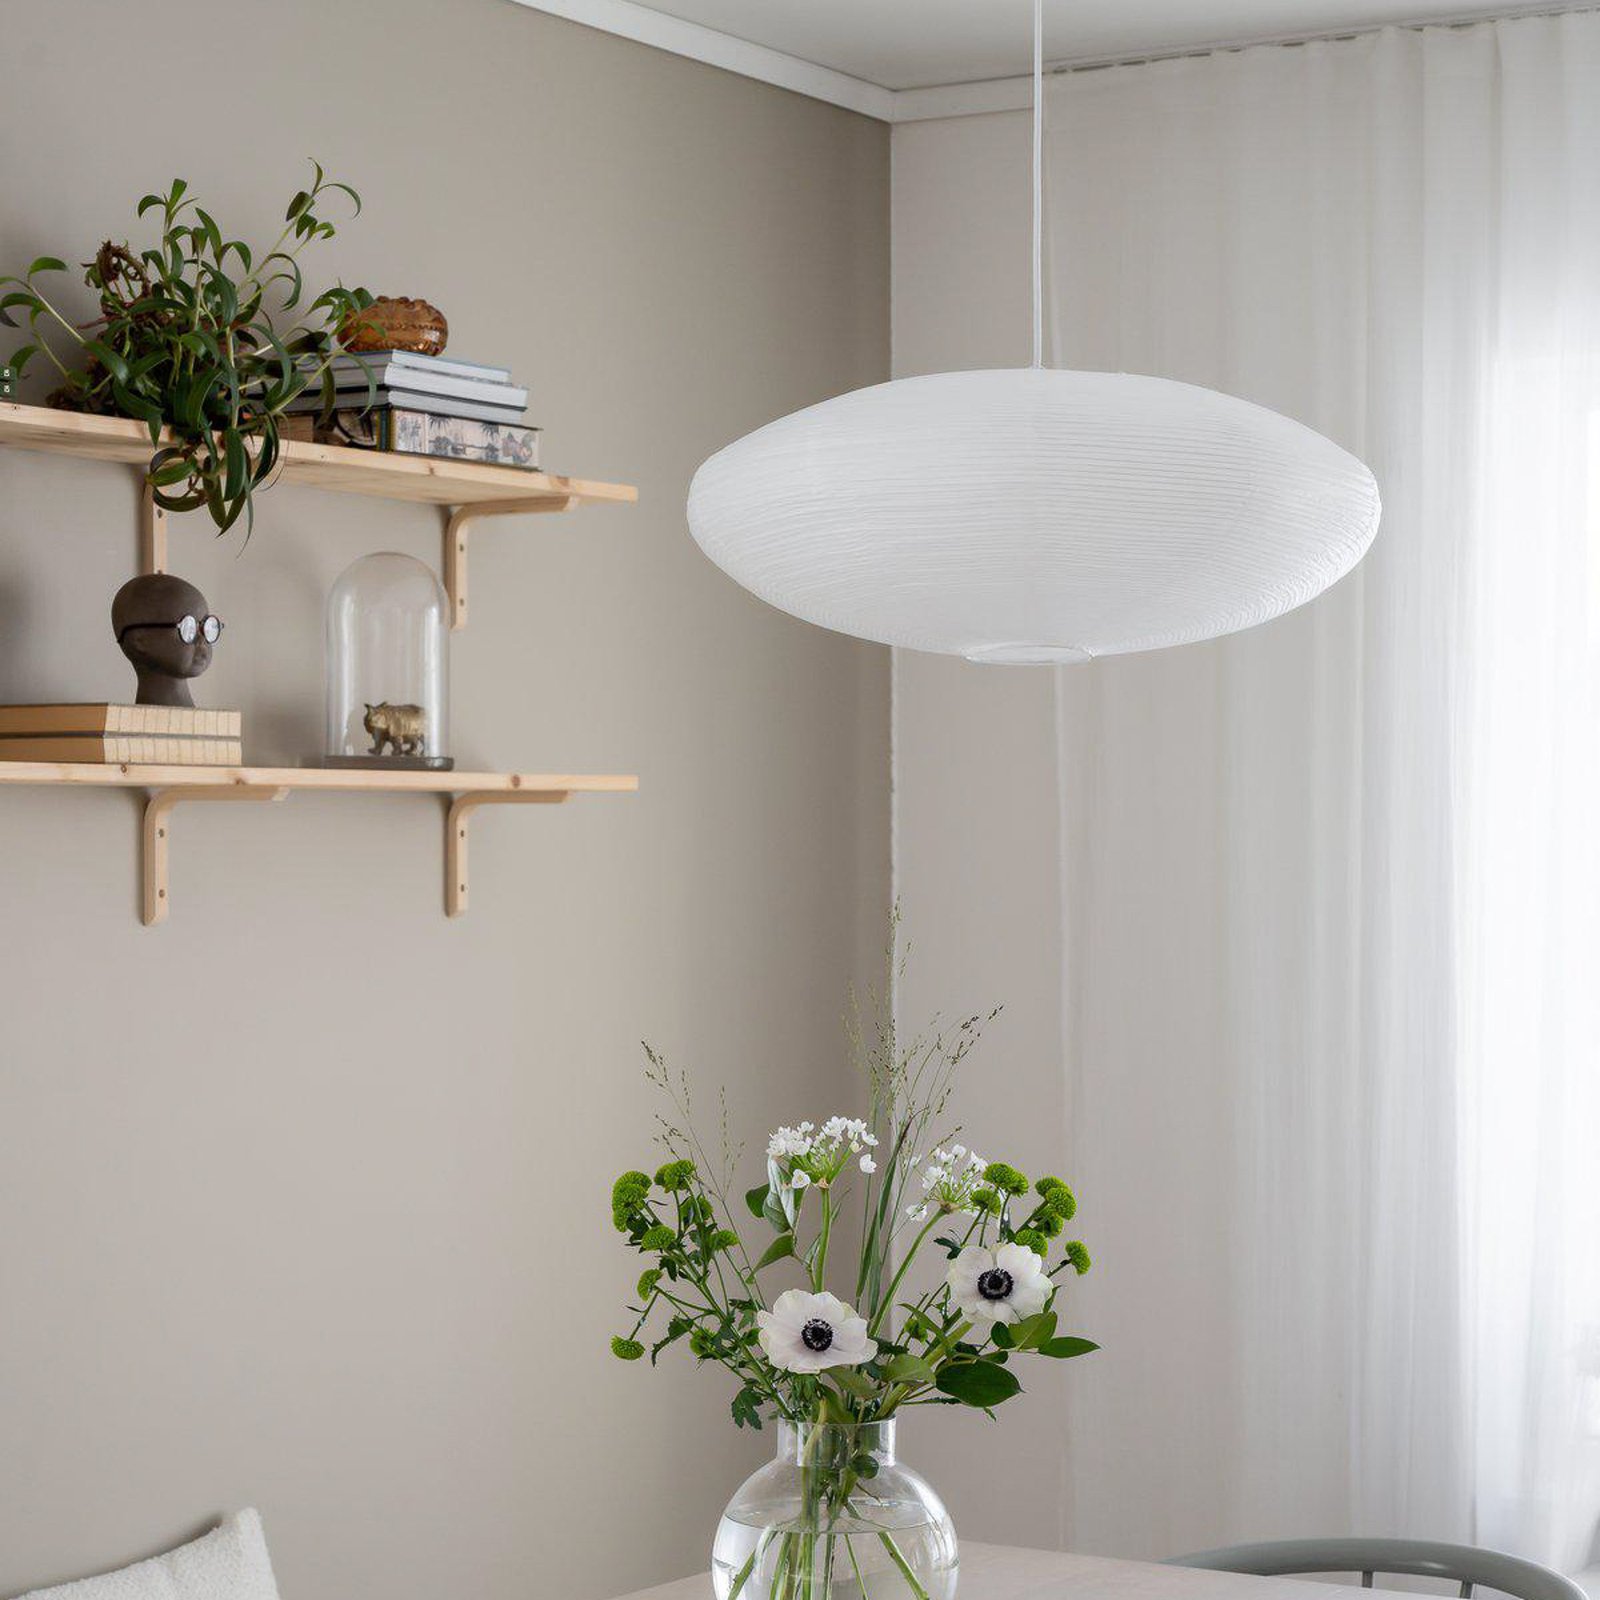 PR Home hanging light Yuni, white, Ø 60 cm, white suspension system, E14